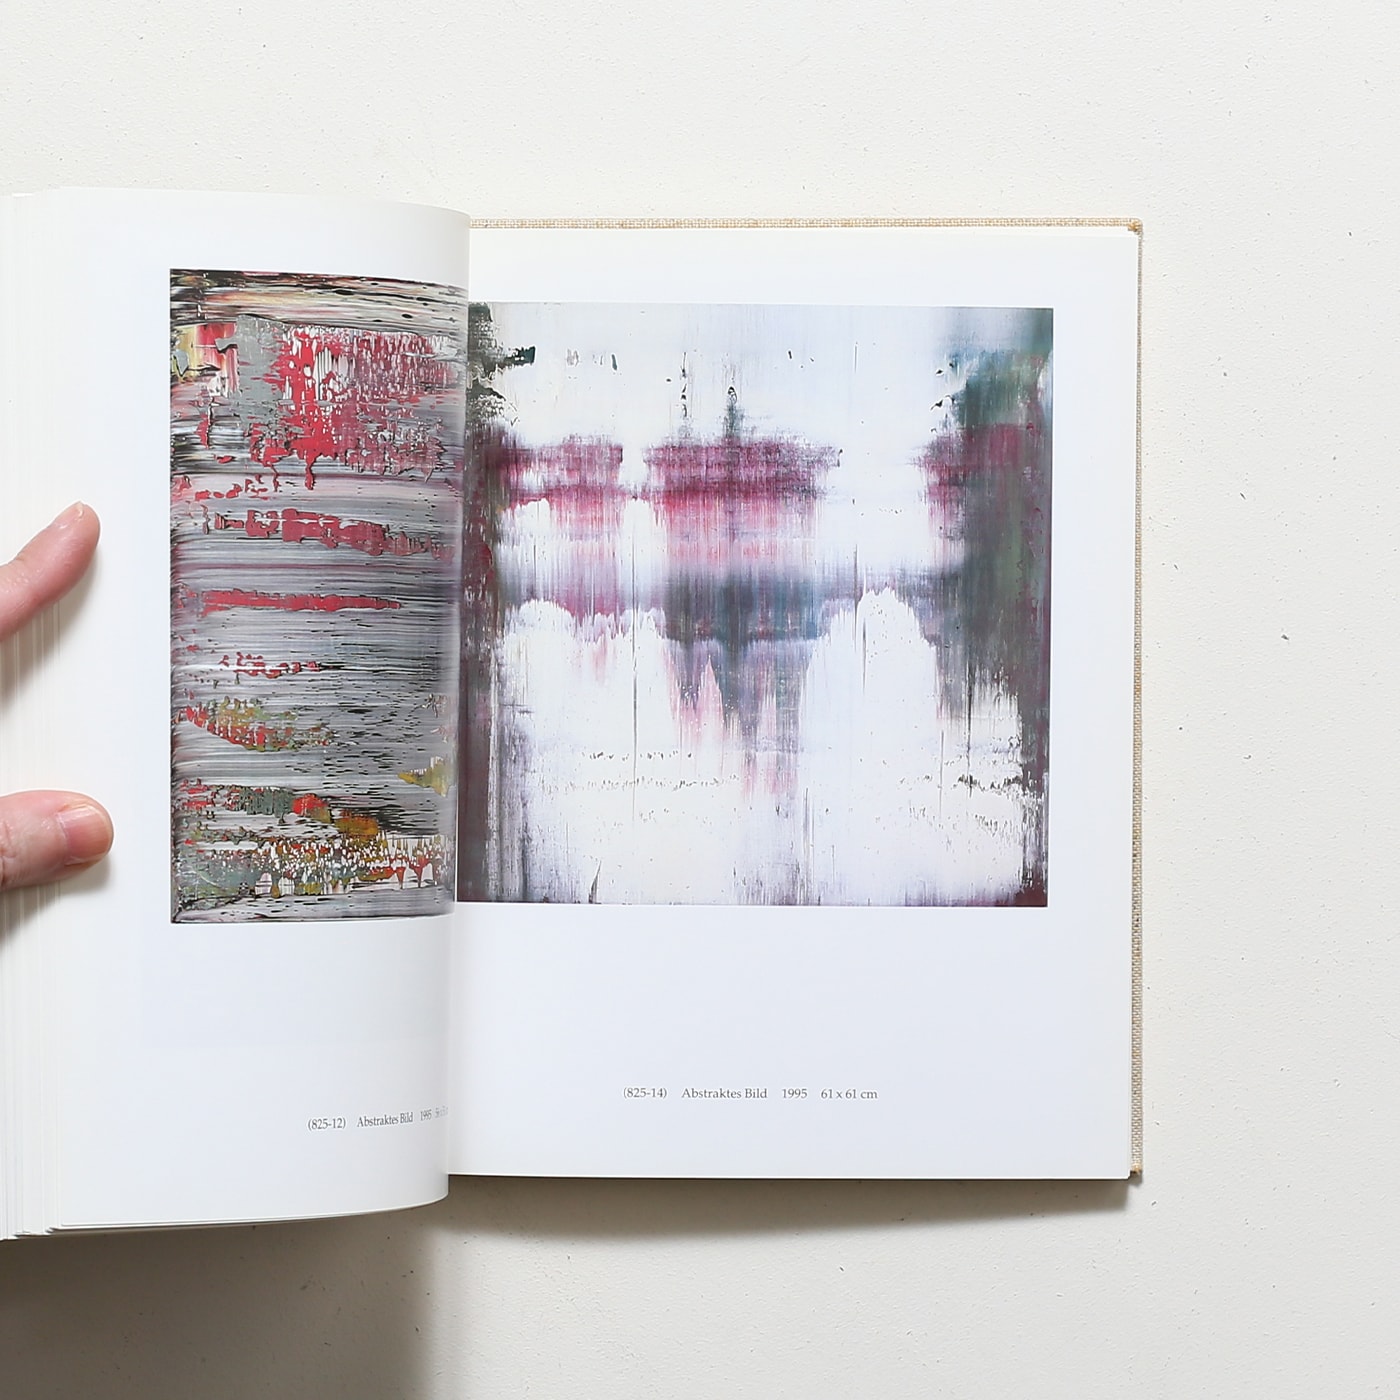 Gerhard Richter: 100 Pictures